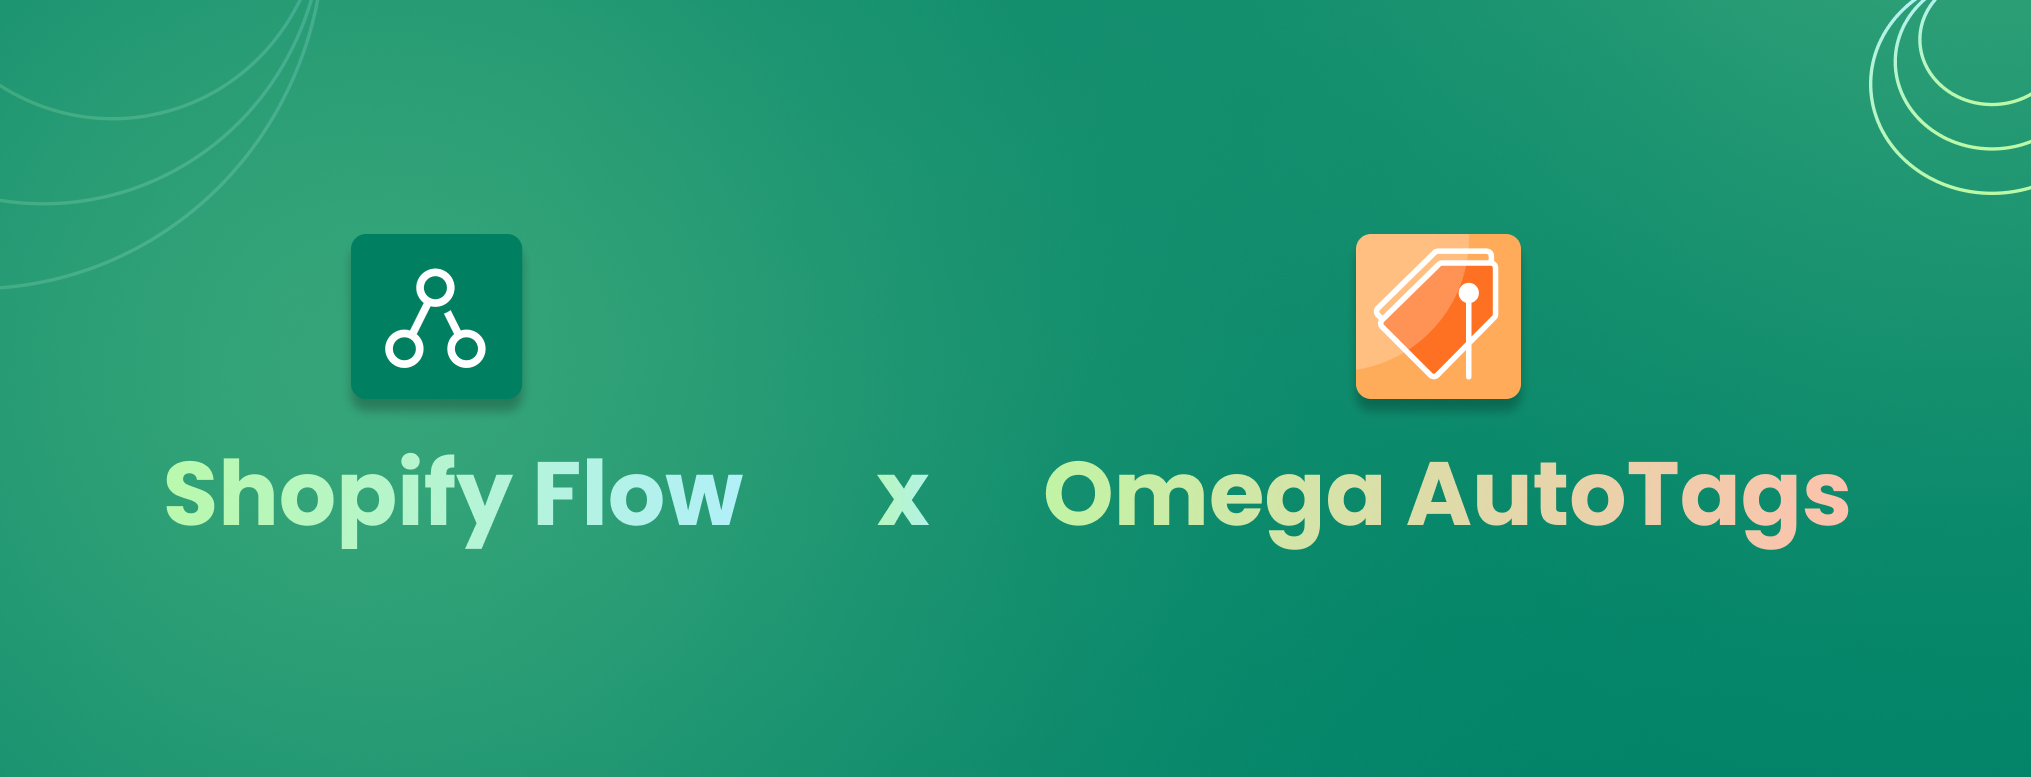 shopify flow omega autotag